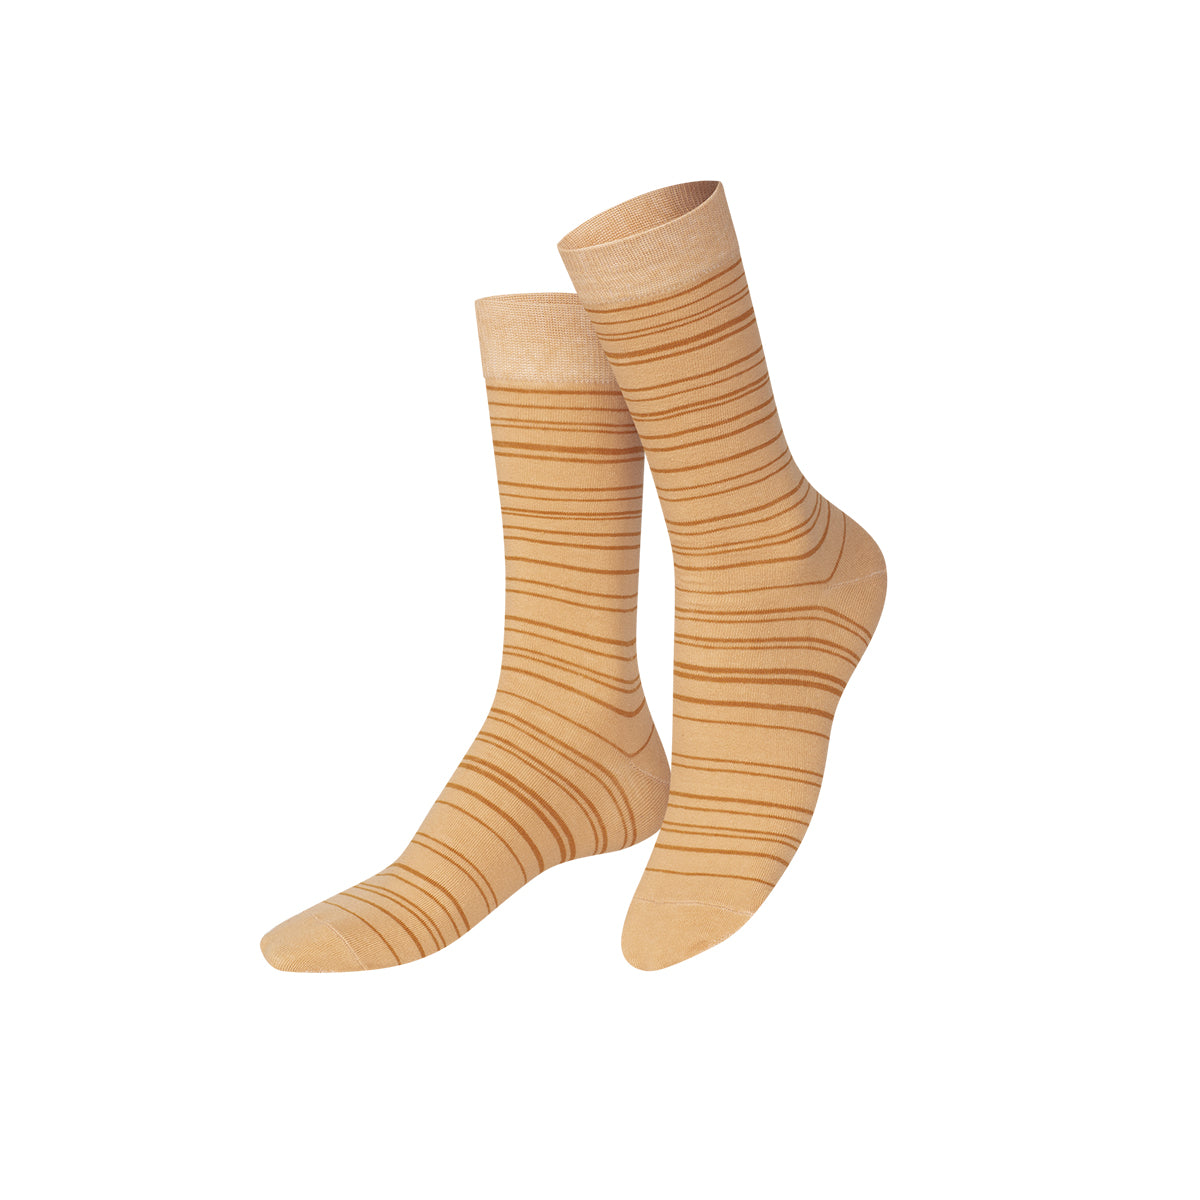 Socks Croissant